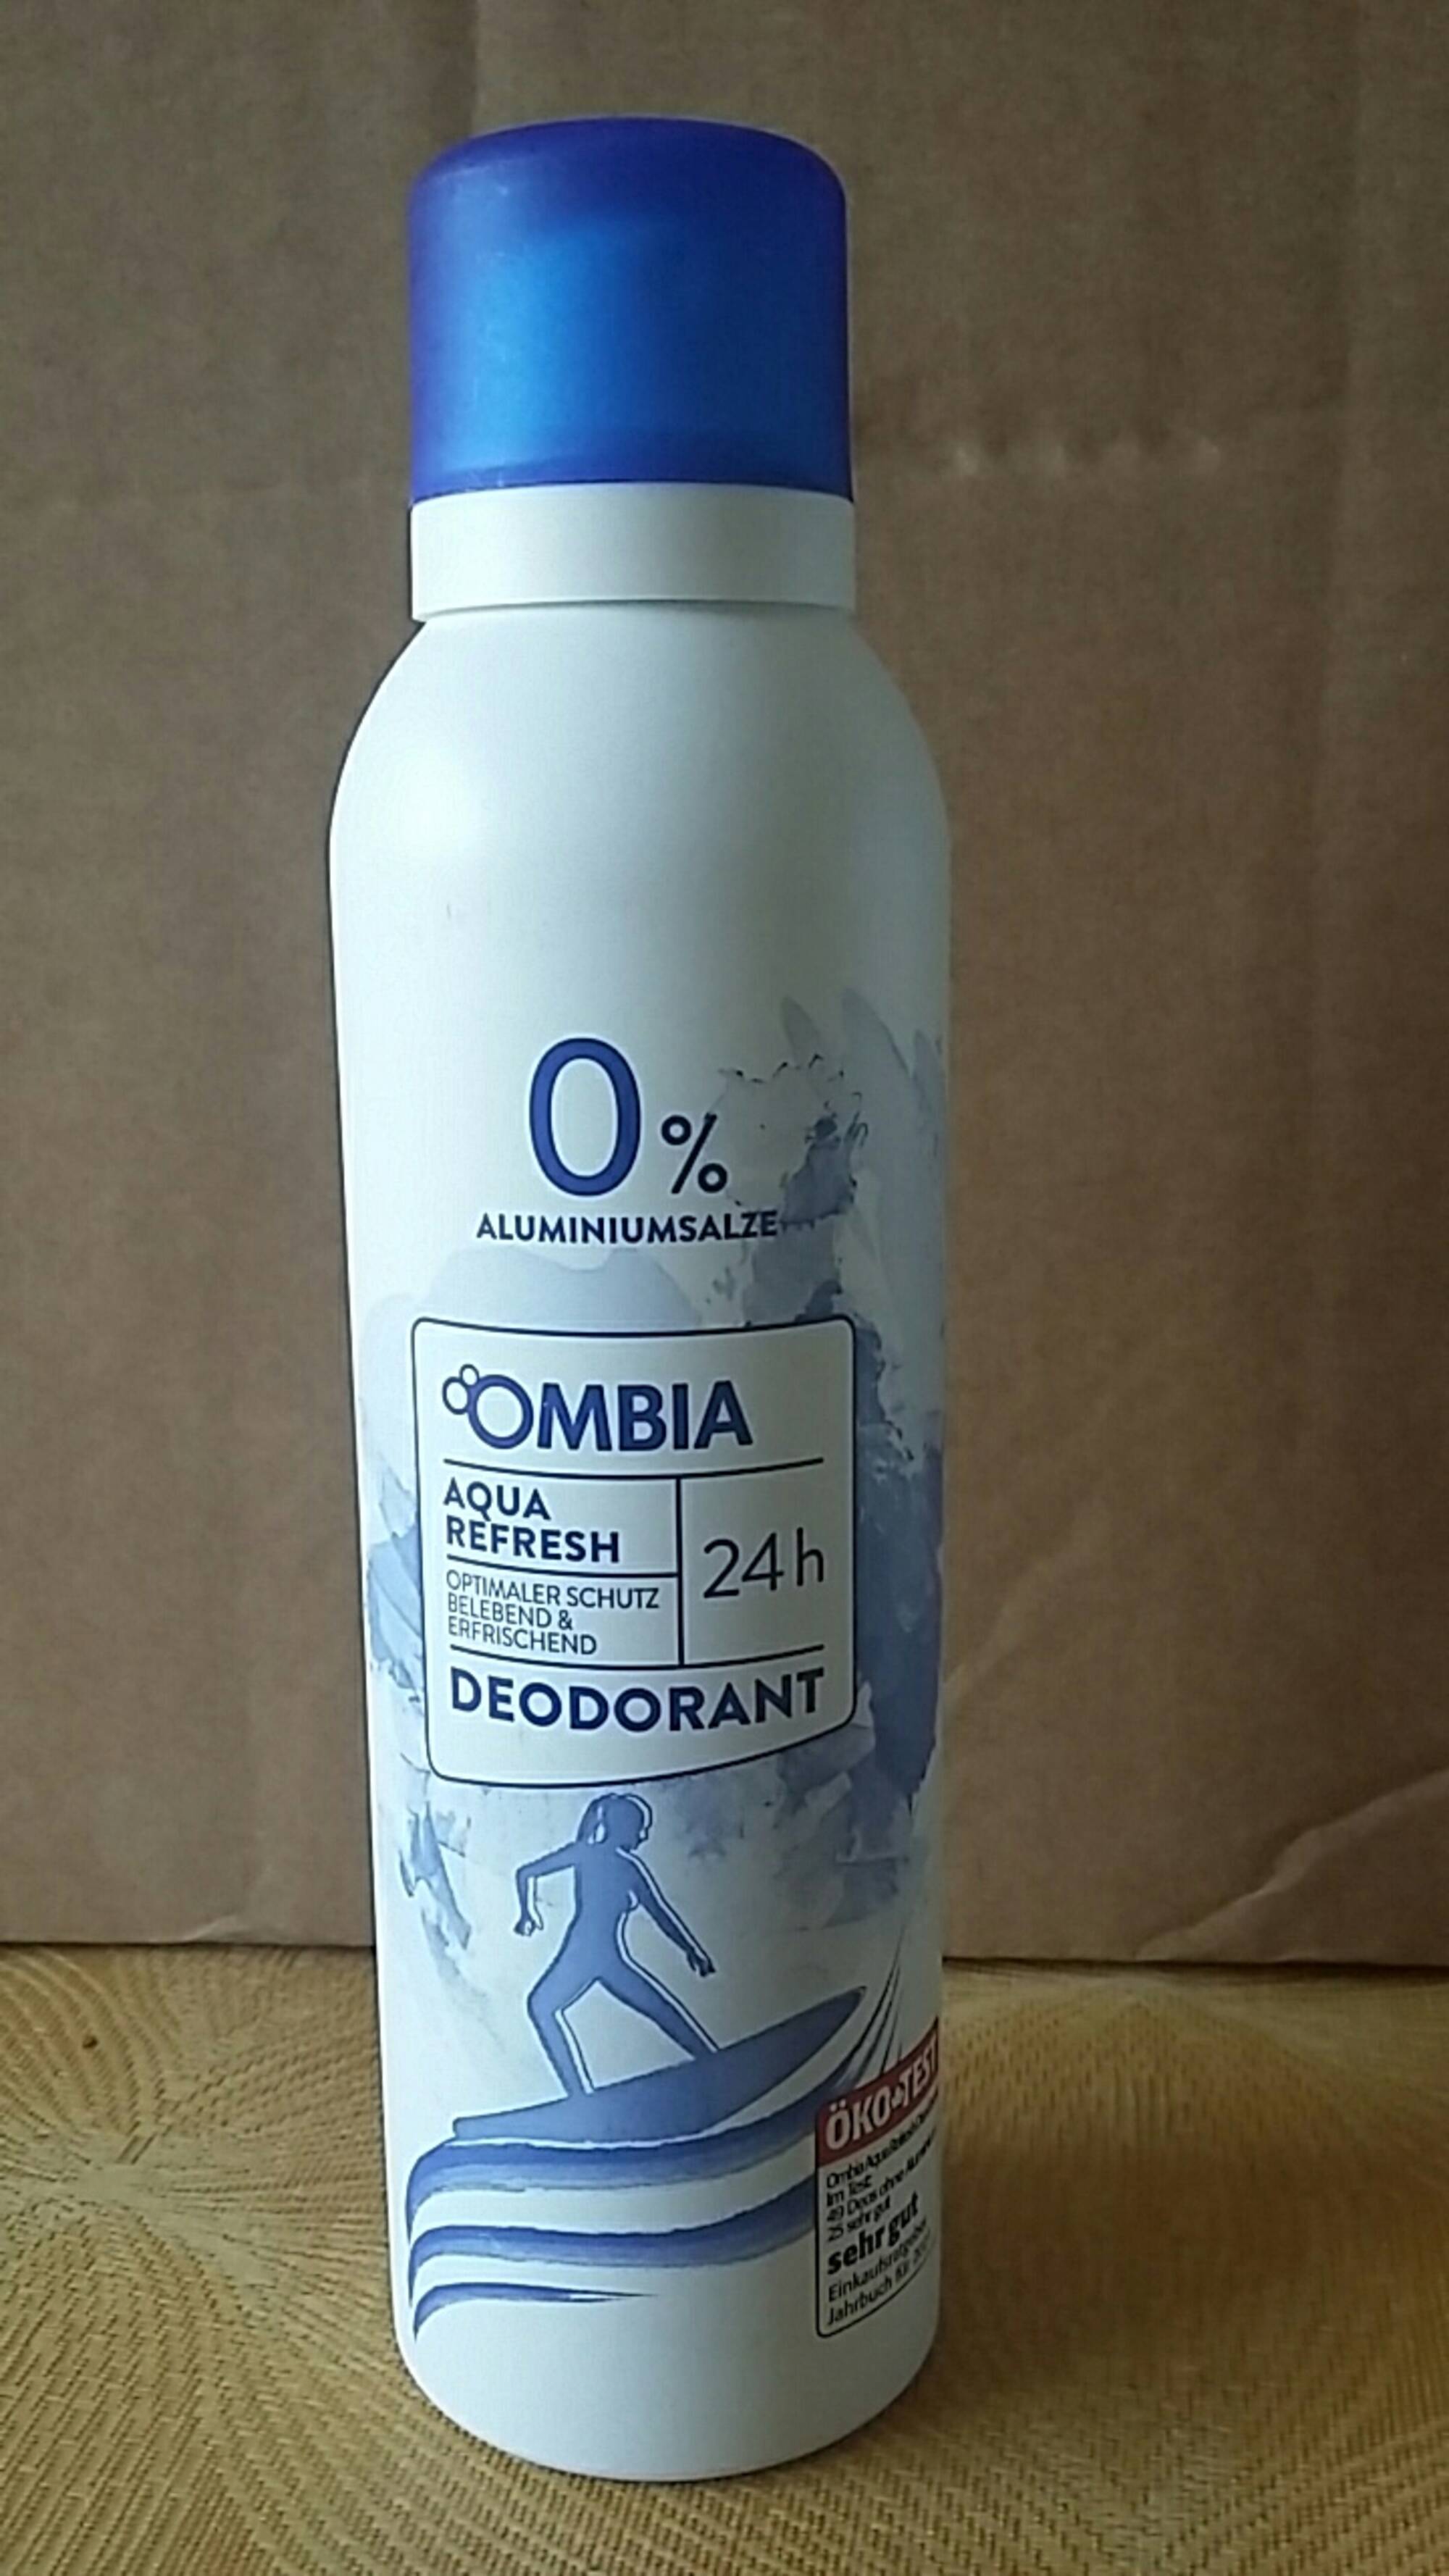 OMBIA - Aqua refresh - Déodorant 24h